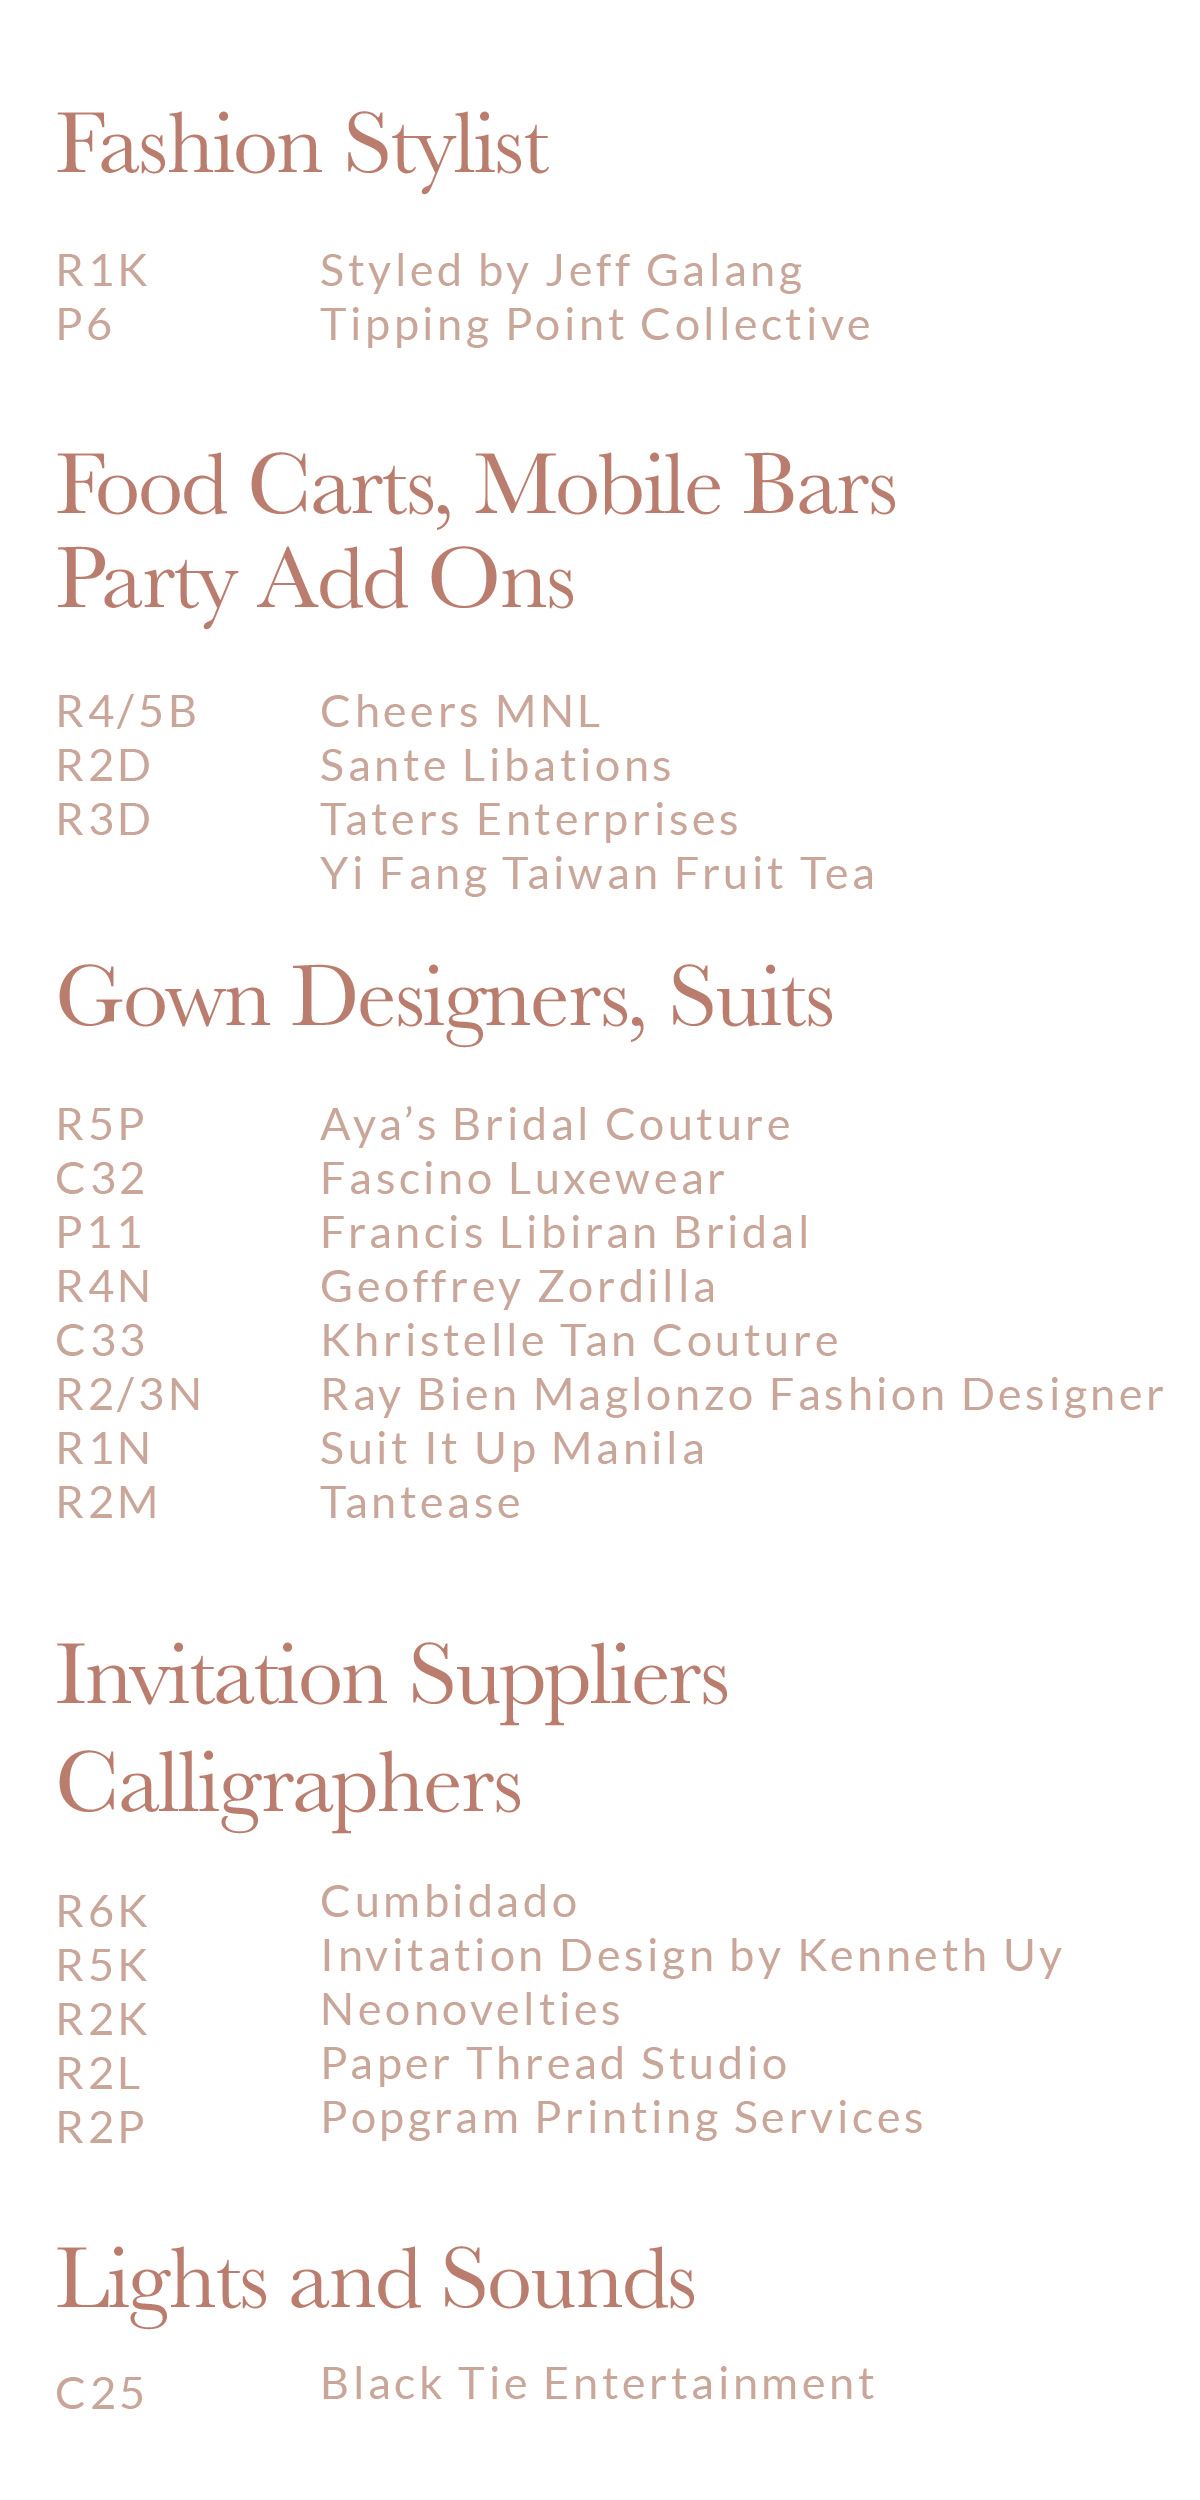 R1K, Styled by Jeff Galang /P6,Tipping Point Collective /R4B, R5B, Cheers MNL /R2D, Sante Libations /R3D, Taters Enterprises /R5P, Aya’s Bridal Couture /C32, Fascino Luxewear /P11, Francis Libiran Bridal /R4N, Geoffrey Zordilla /C33, Khristelle Tan Couture /R2N, R3N, Ray Bien Maglonzo Fashion Designer /R1N, Suit It Up Manila /R2M, Tantease /R6K, Cumbidado /R5K, Invitation Design by Kenneth Uy /R2K, Neonovelties /R2L, Paper Thread Studio /R2P, Popgram Printing Services /P23, Imelda’s Jewelry /P4, P5, J’s Diamond /C25, Black Tie Entertainment